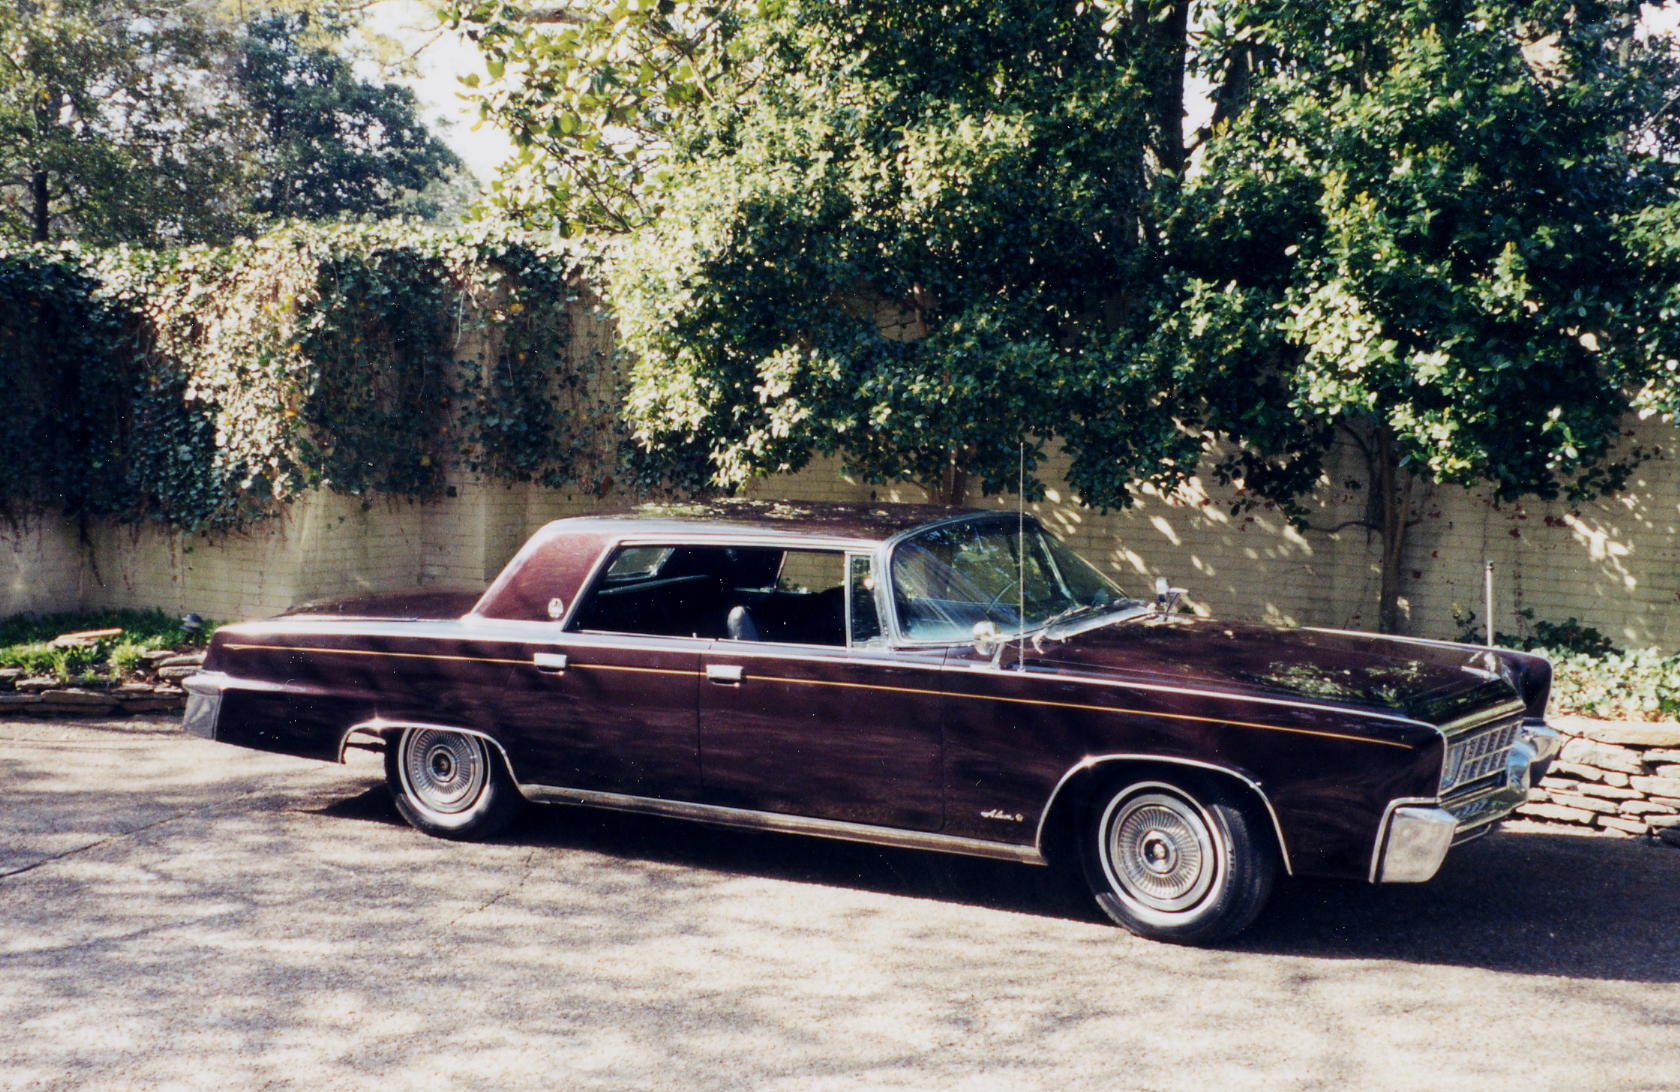 Chris Hawkins's 1966 (Chrysler) Imperial LeBaron